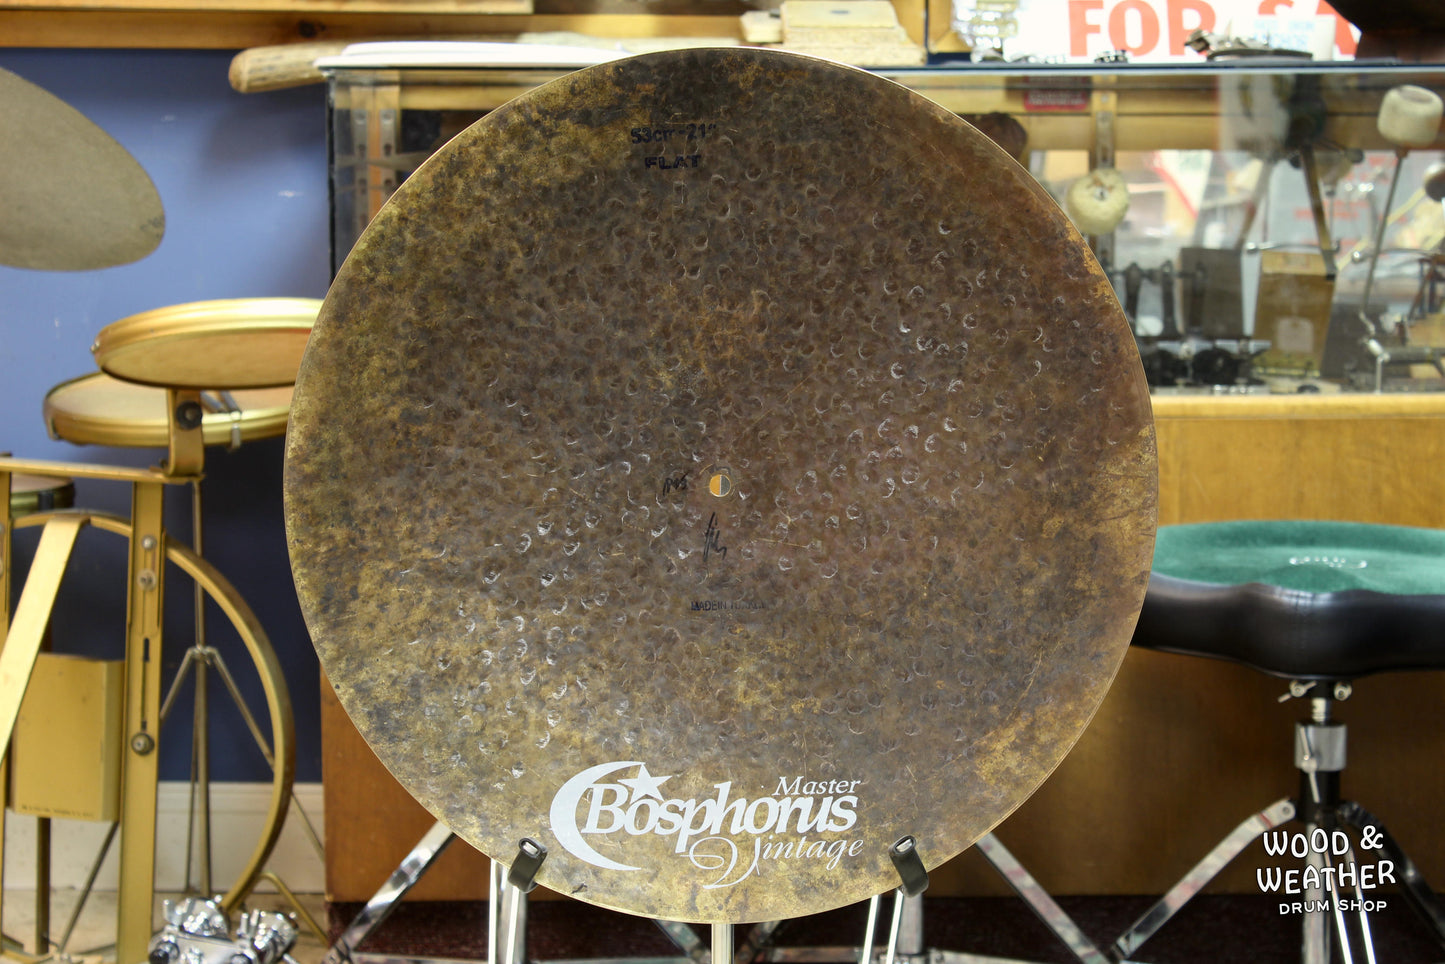 Bosphorus 21" Master Vintage Flat Ride Cymbal 1815g